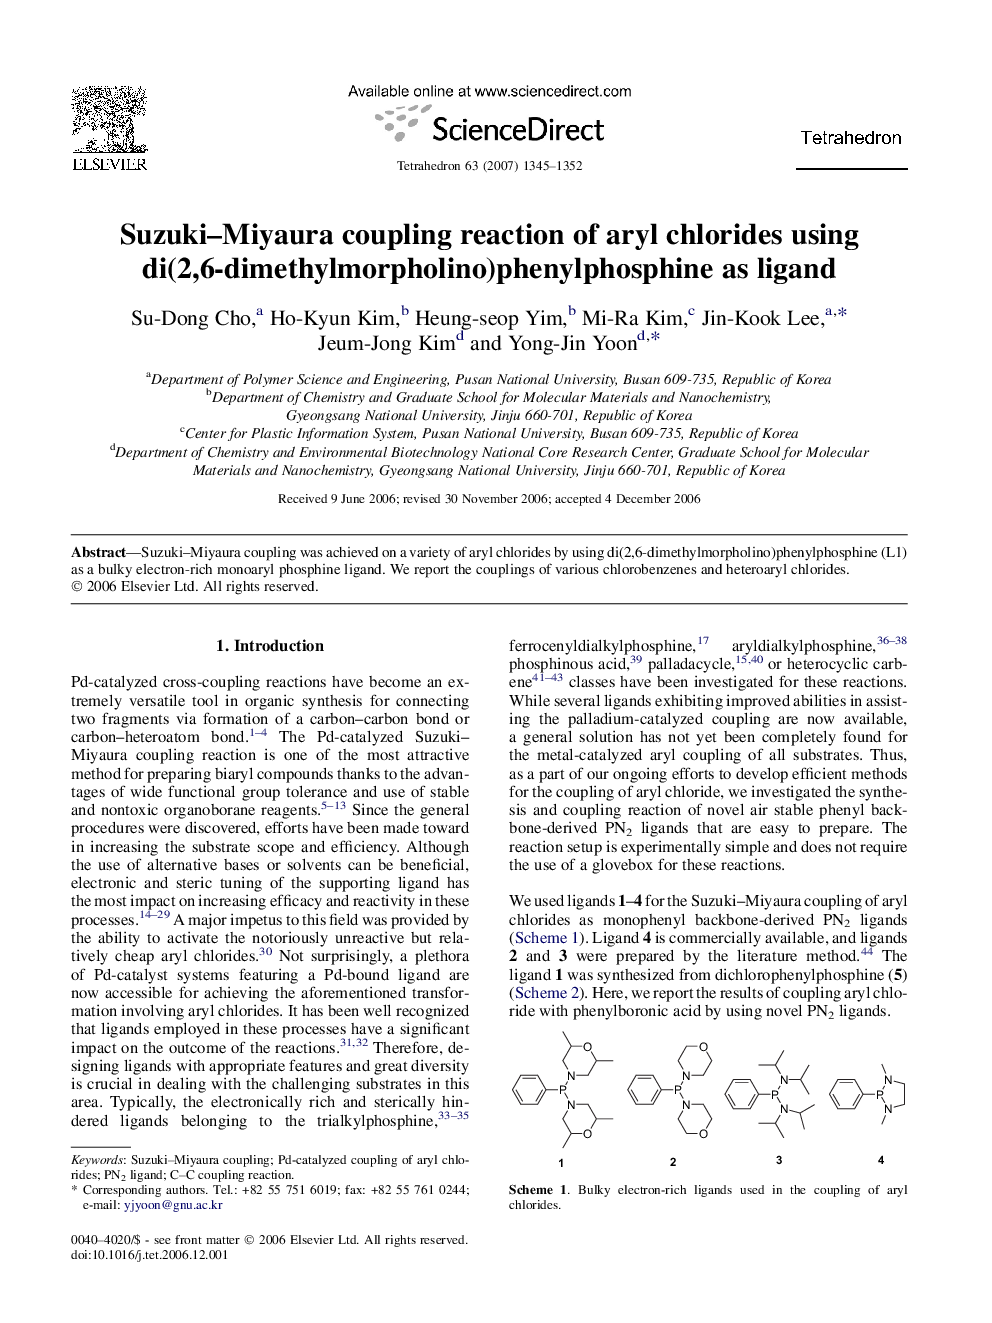 Suzuki-Miyaura coupling reaction of aryl chlorides using di(2,6-dimethylmorpholino)phenylphosphine as ligand